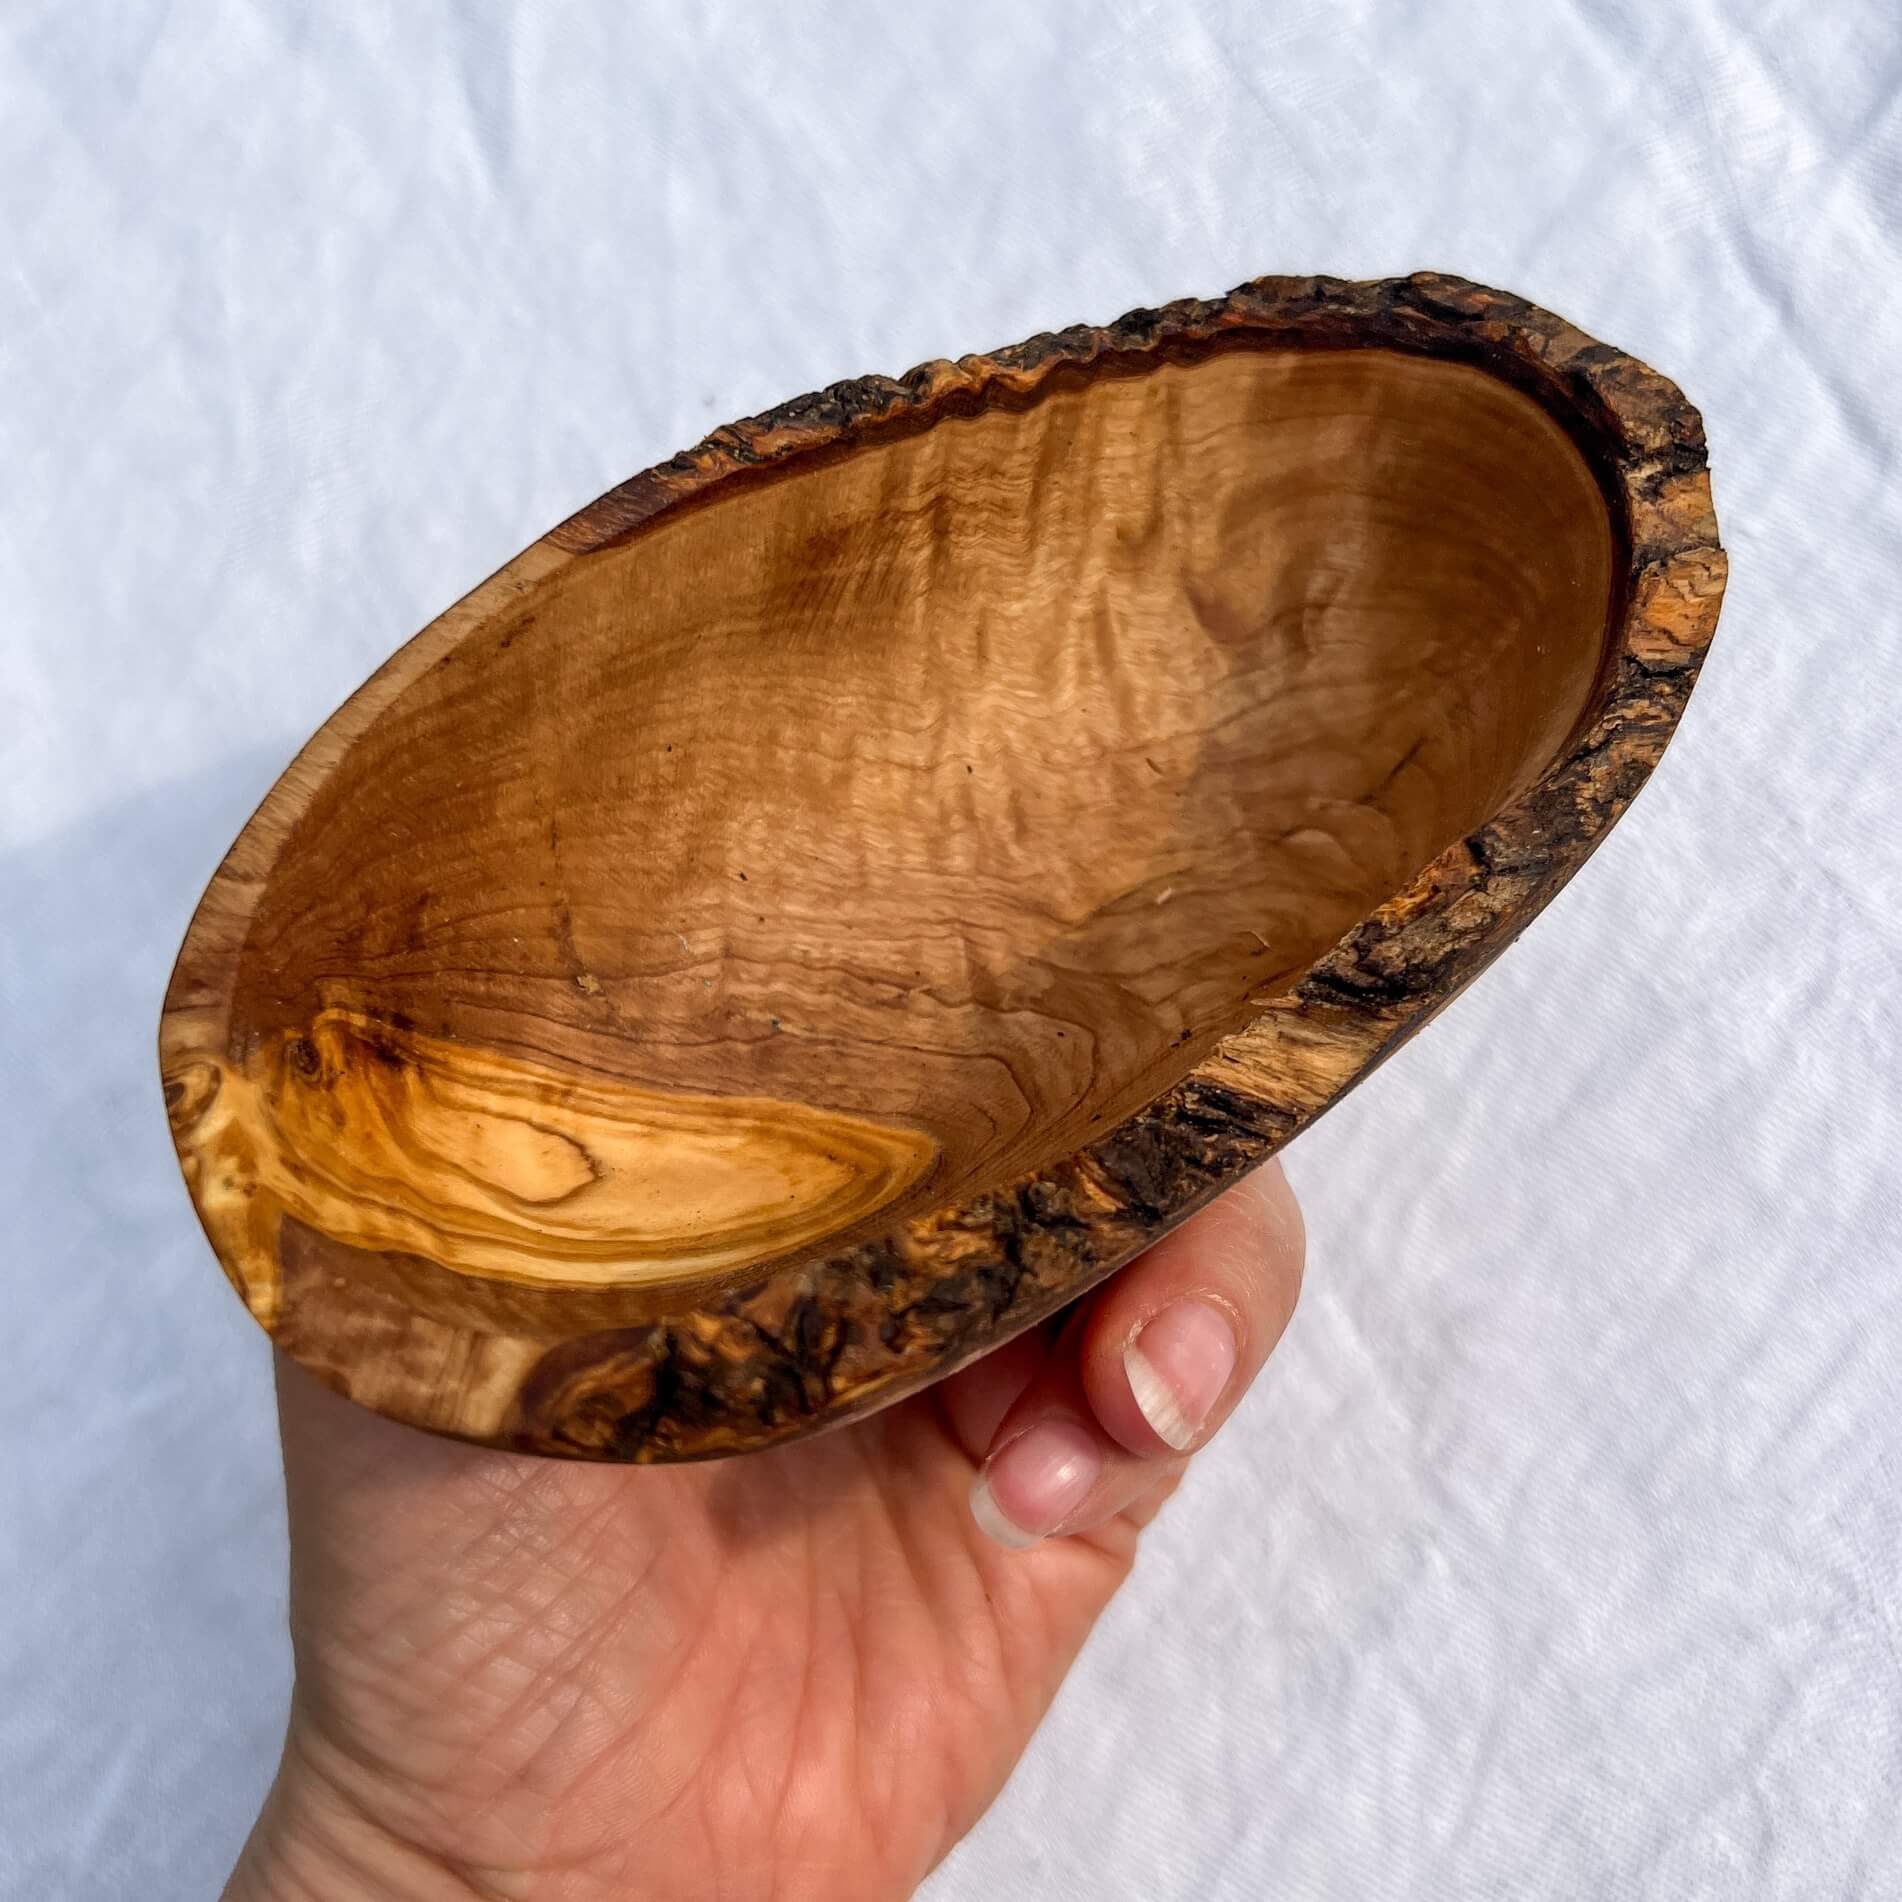 Buy Rustic Olive Wood Nut Bowl Online